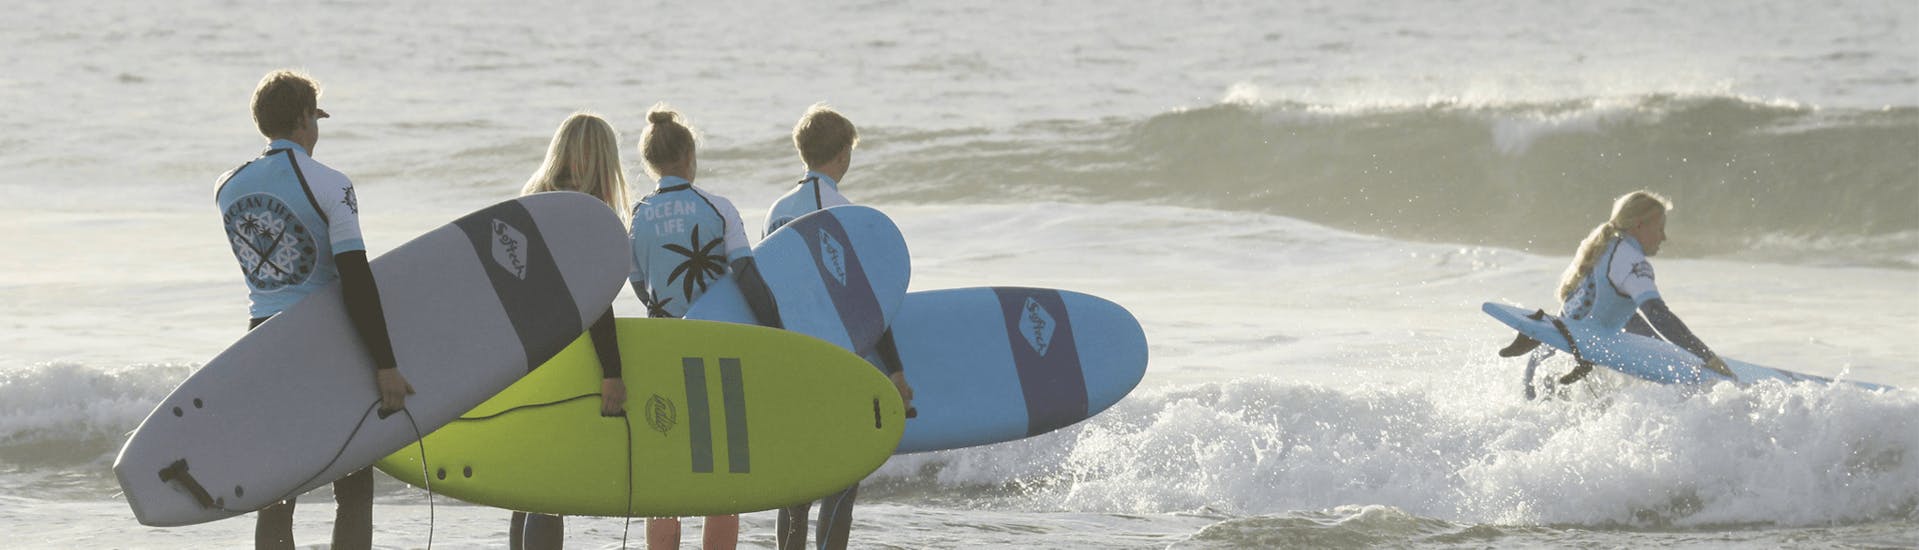 surfing-lessons-for-adults-beginners-tenerife-ocean-life-surf-school-hero